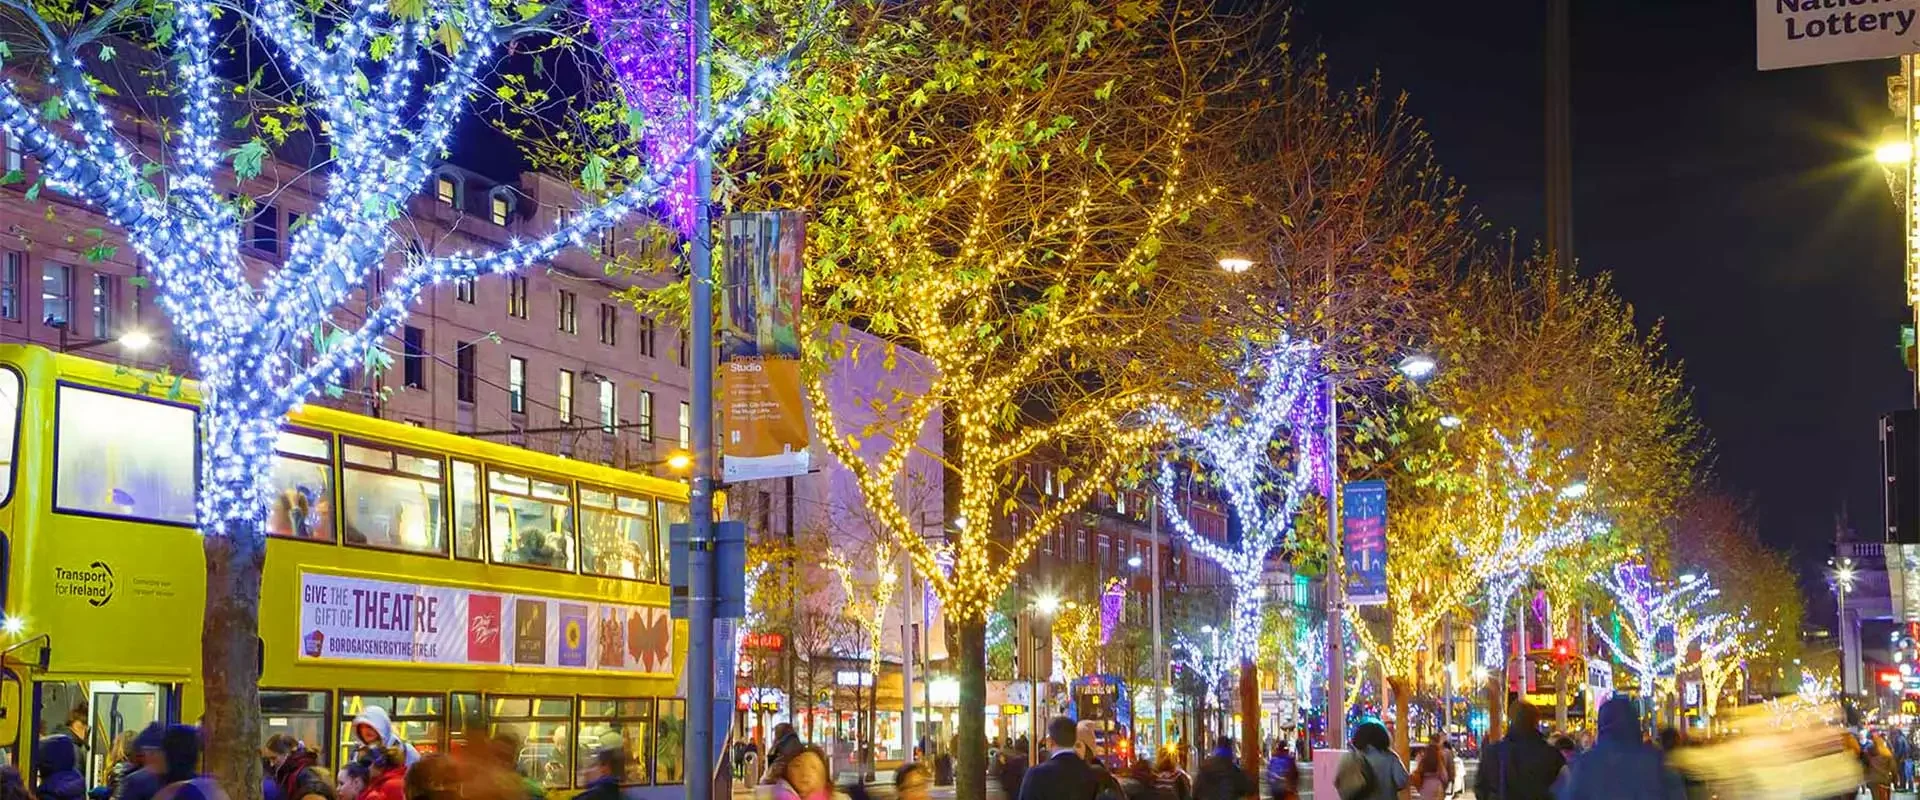 Christmas Tree Lighting On O'Connell Street, Dublin, Ireland By Fantasy Lights On Behalf Of Dublin City Council